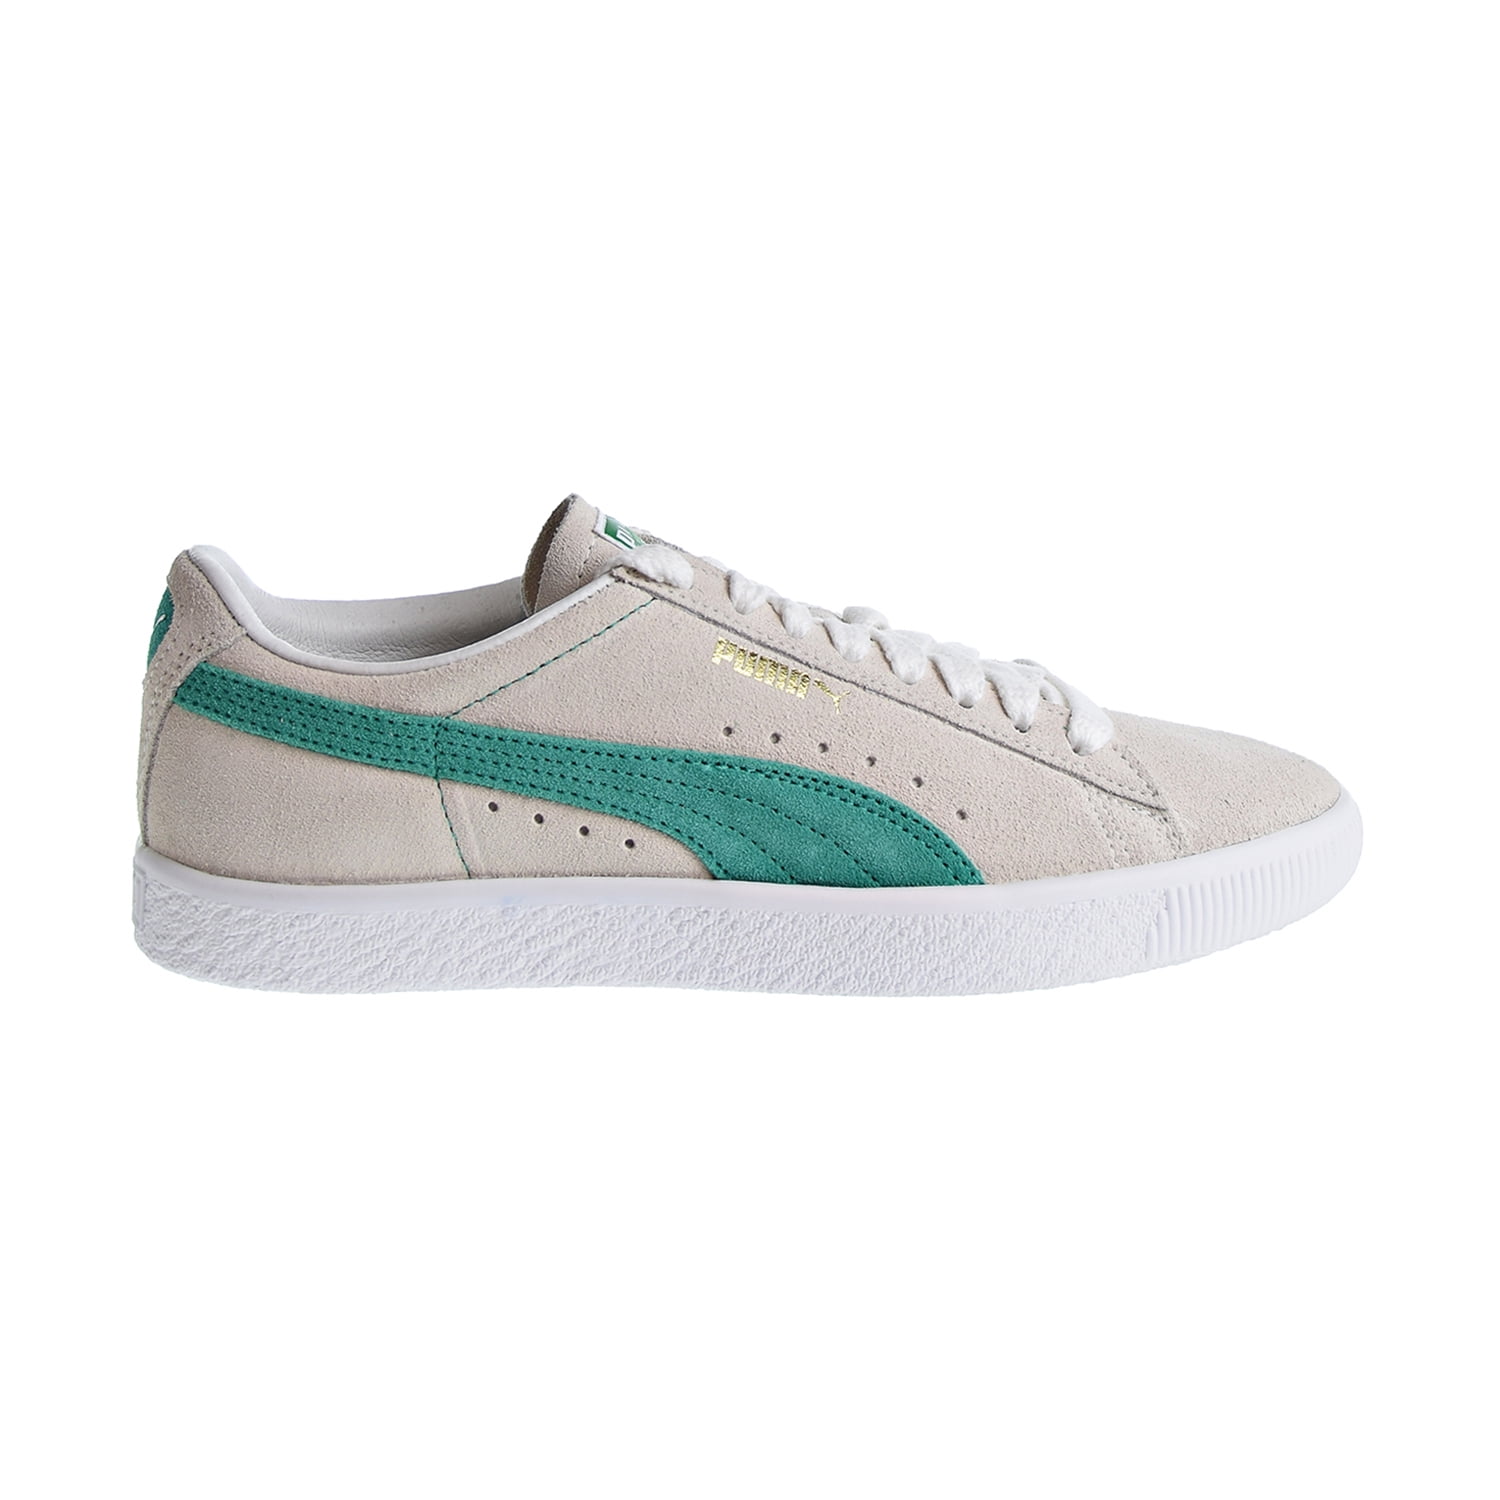 Puma Suede 90681 Men's Shoes Whispher White/Green Flash/White 365942-06 -  Walmart.com